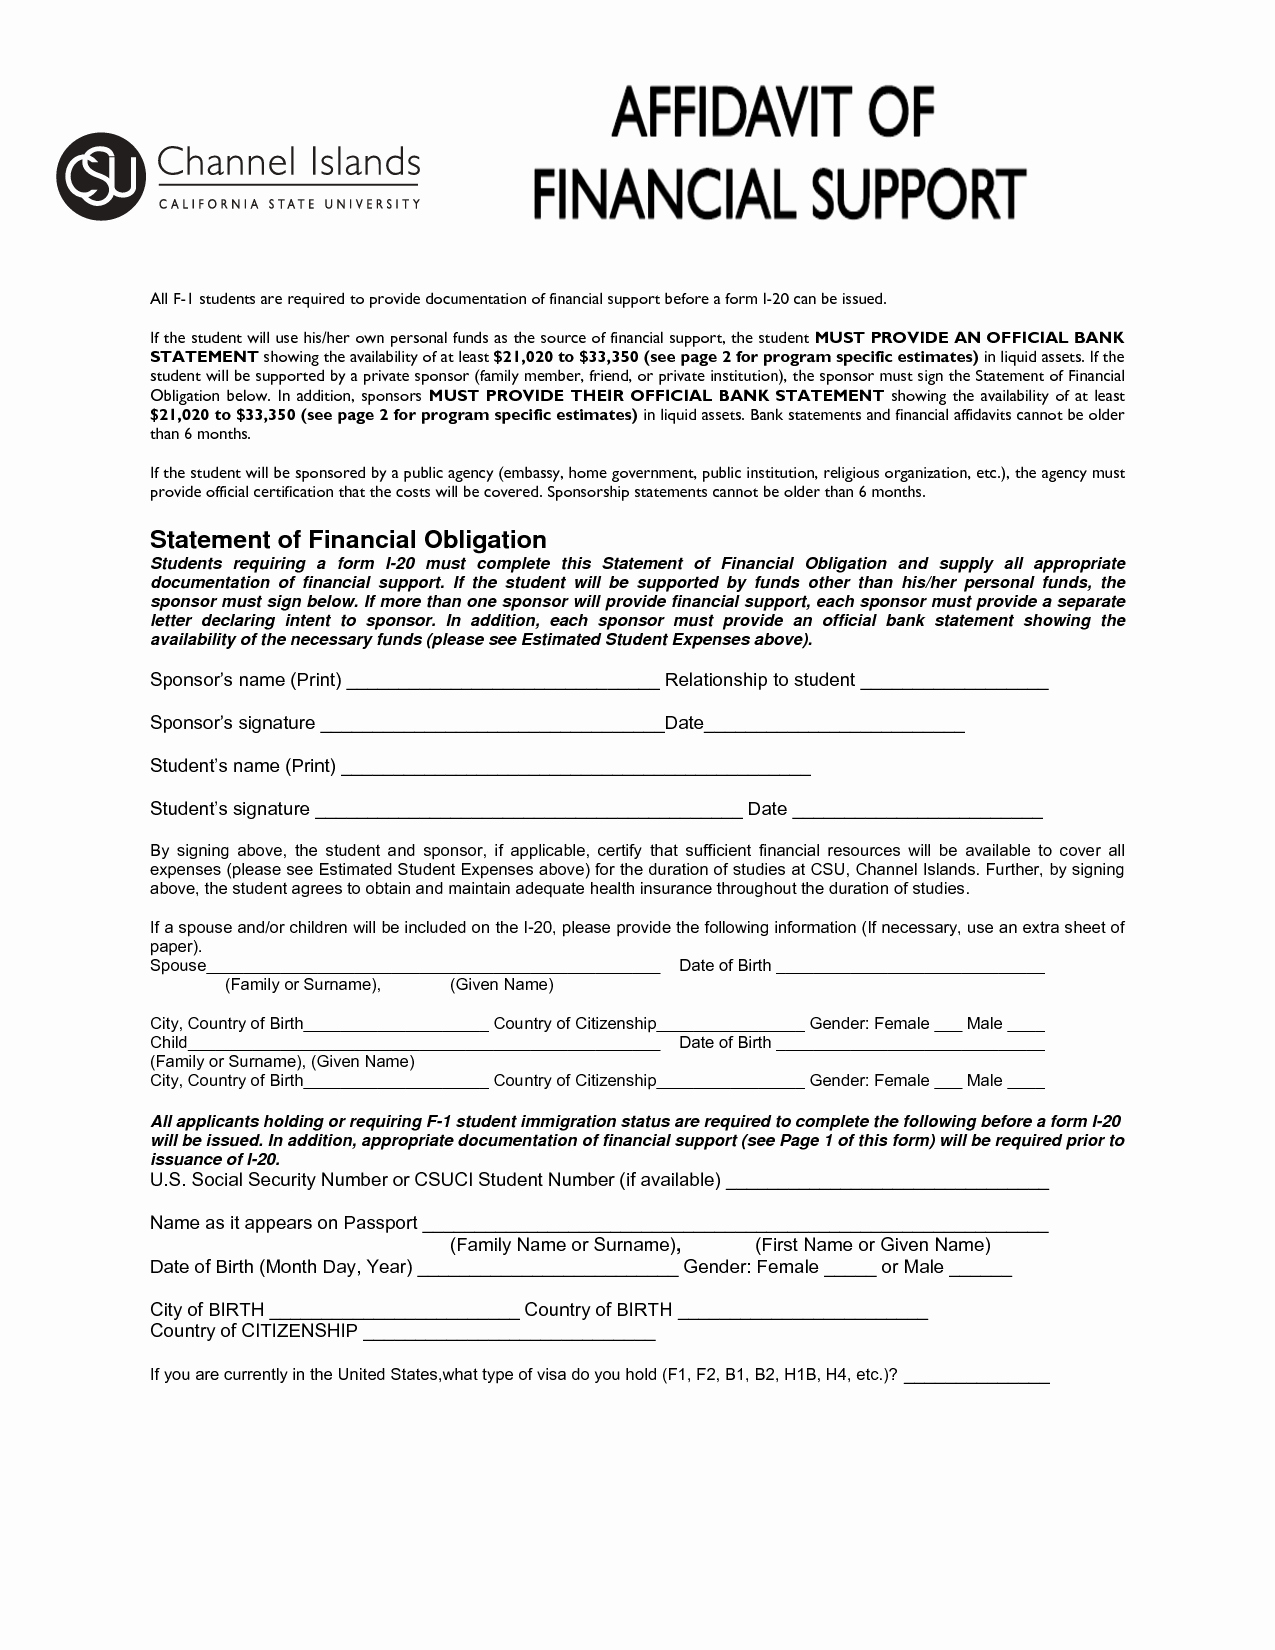 Affidavit Of Support Letter Fresh Search Results Affidavit Of Financial Support Letter